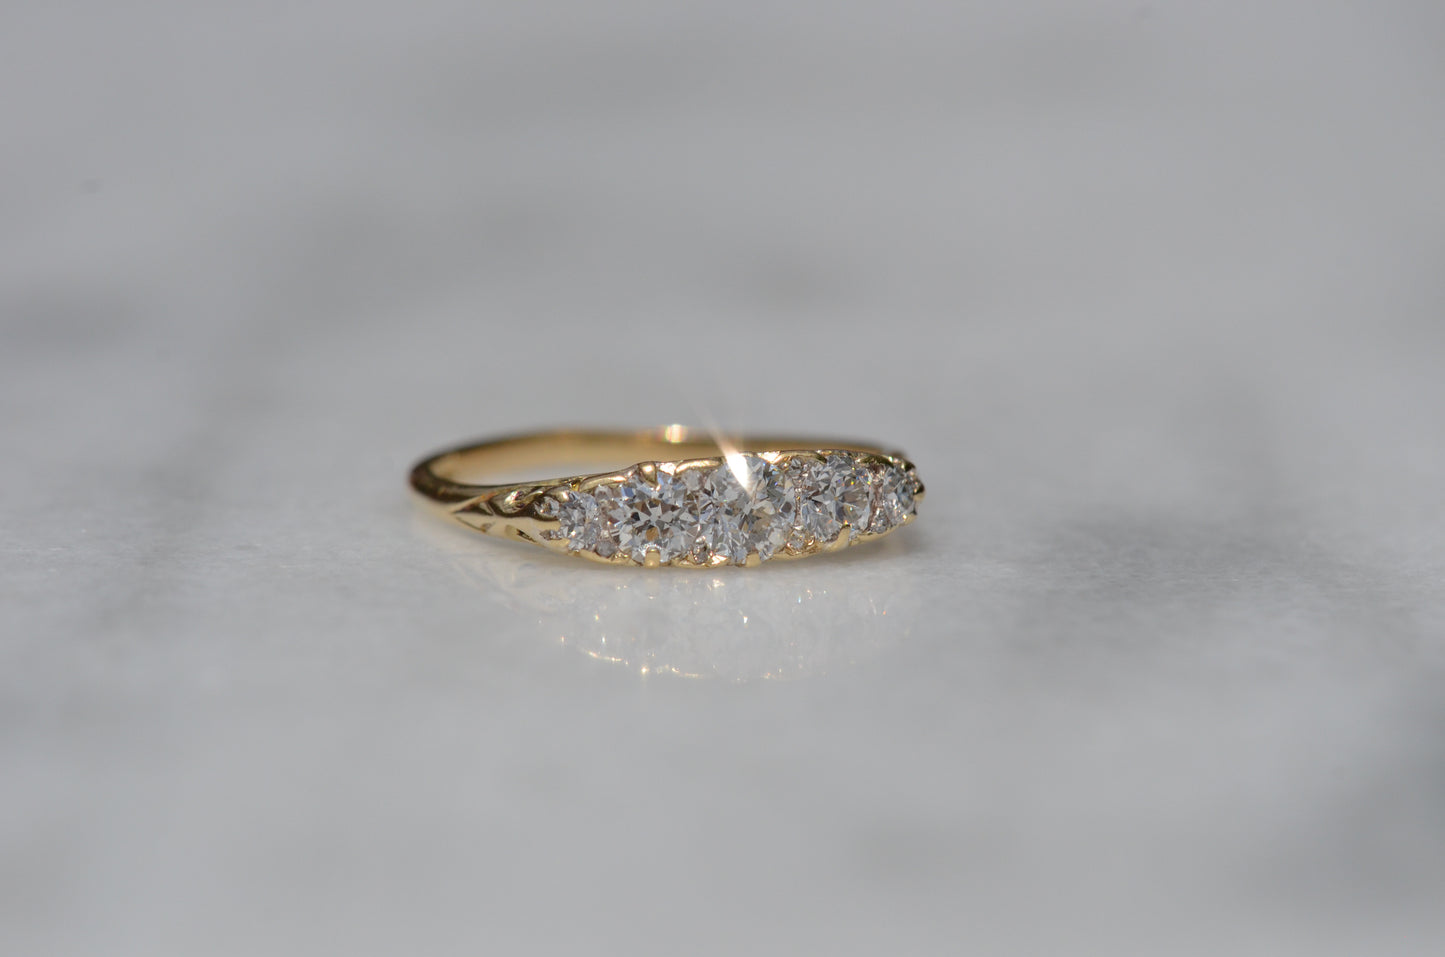 Stunning Vintage Five Diamond Boat Ring